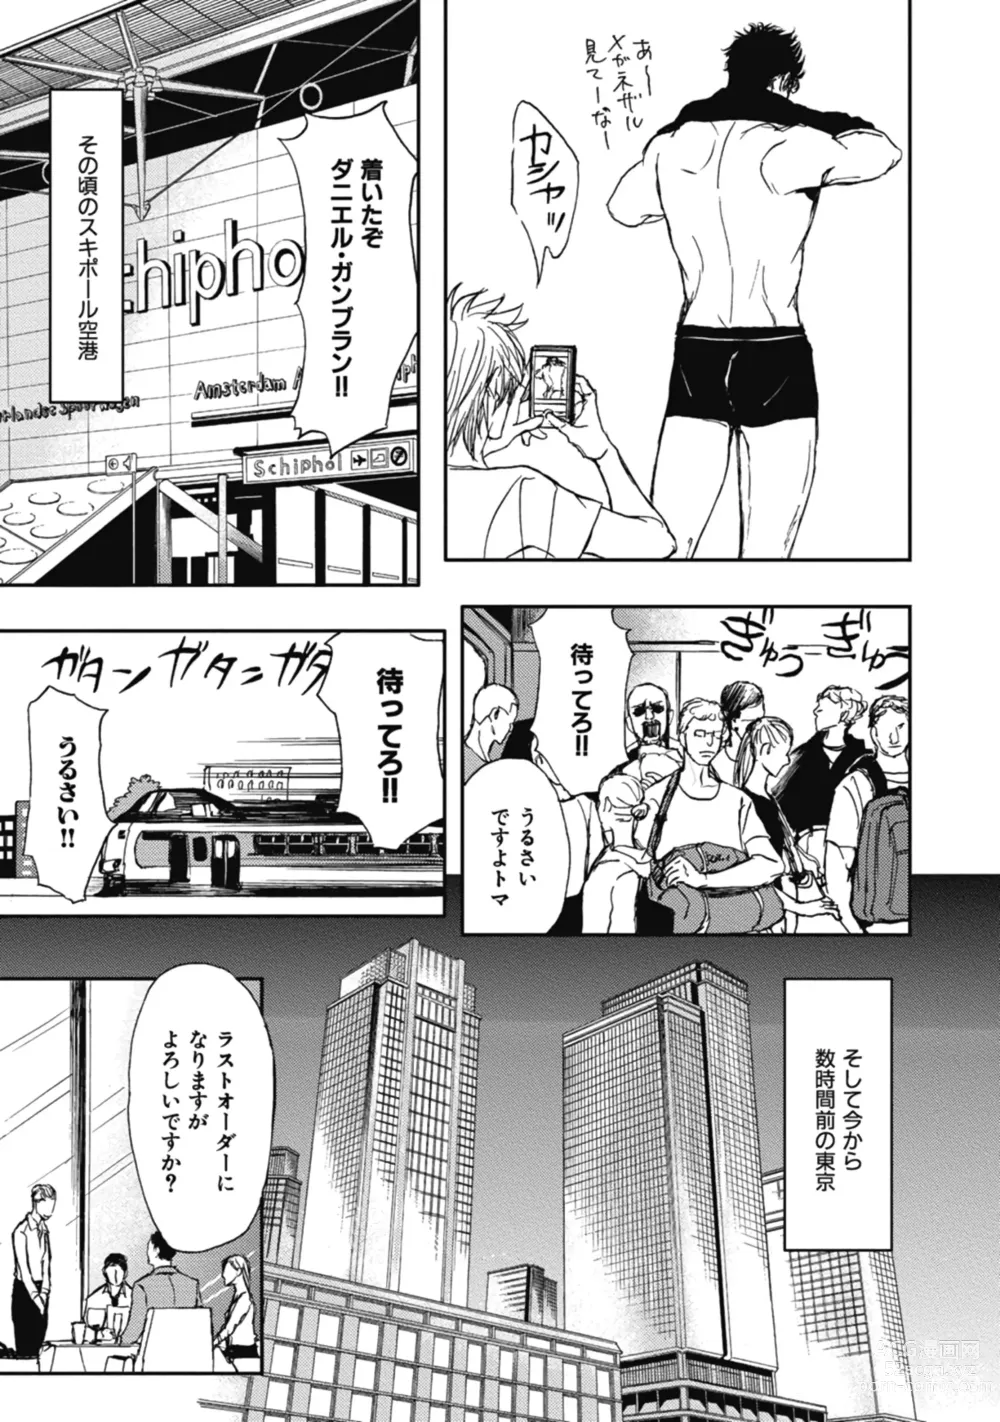 Page 13 of manga Papas Assassin. ~Futari Shite Tonde Yuku.~